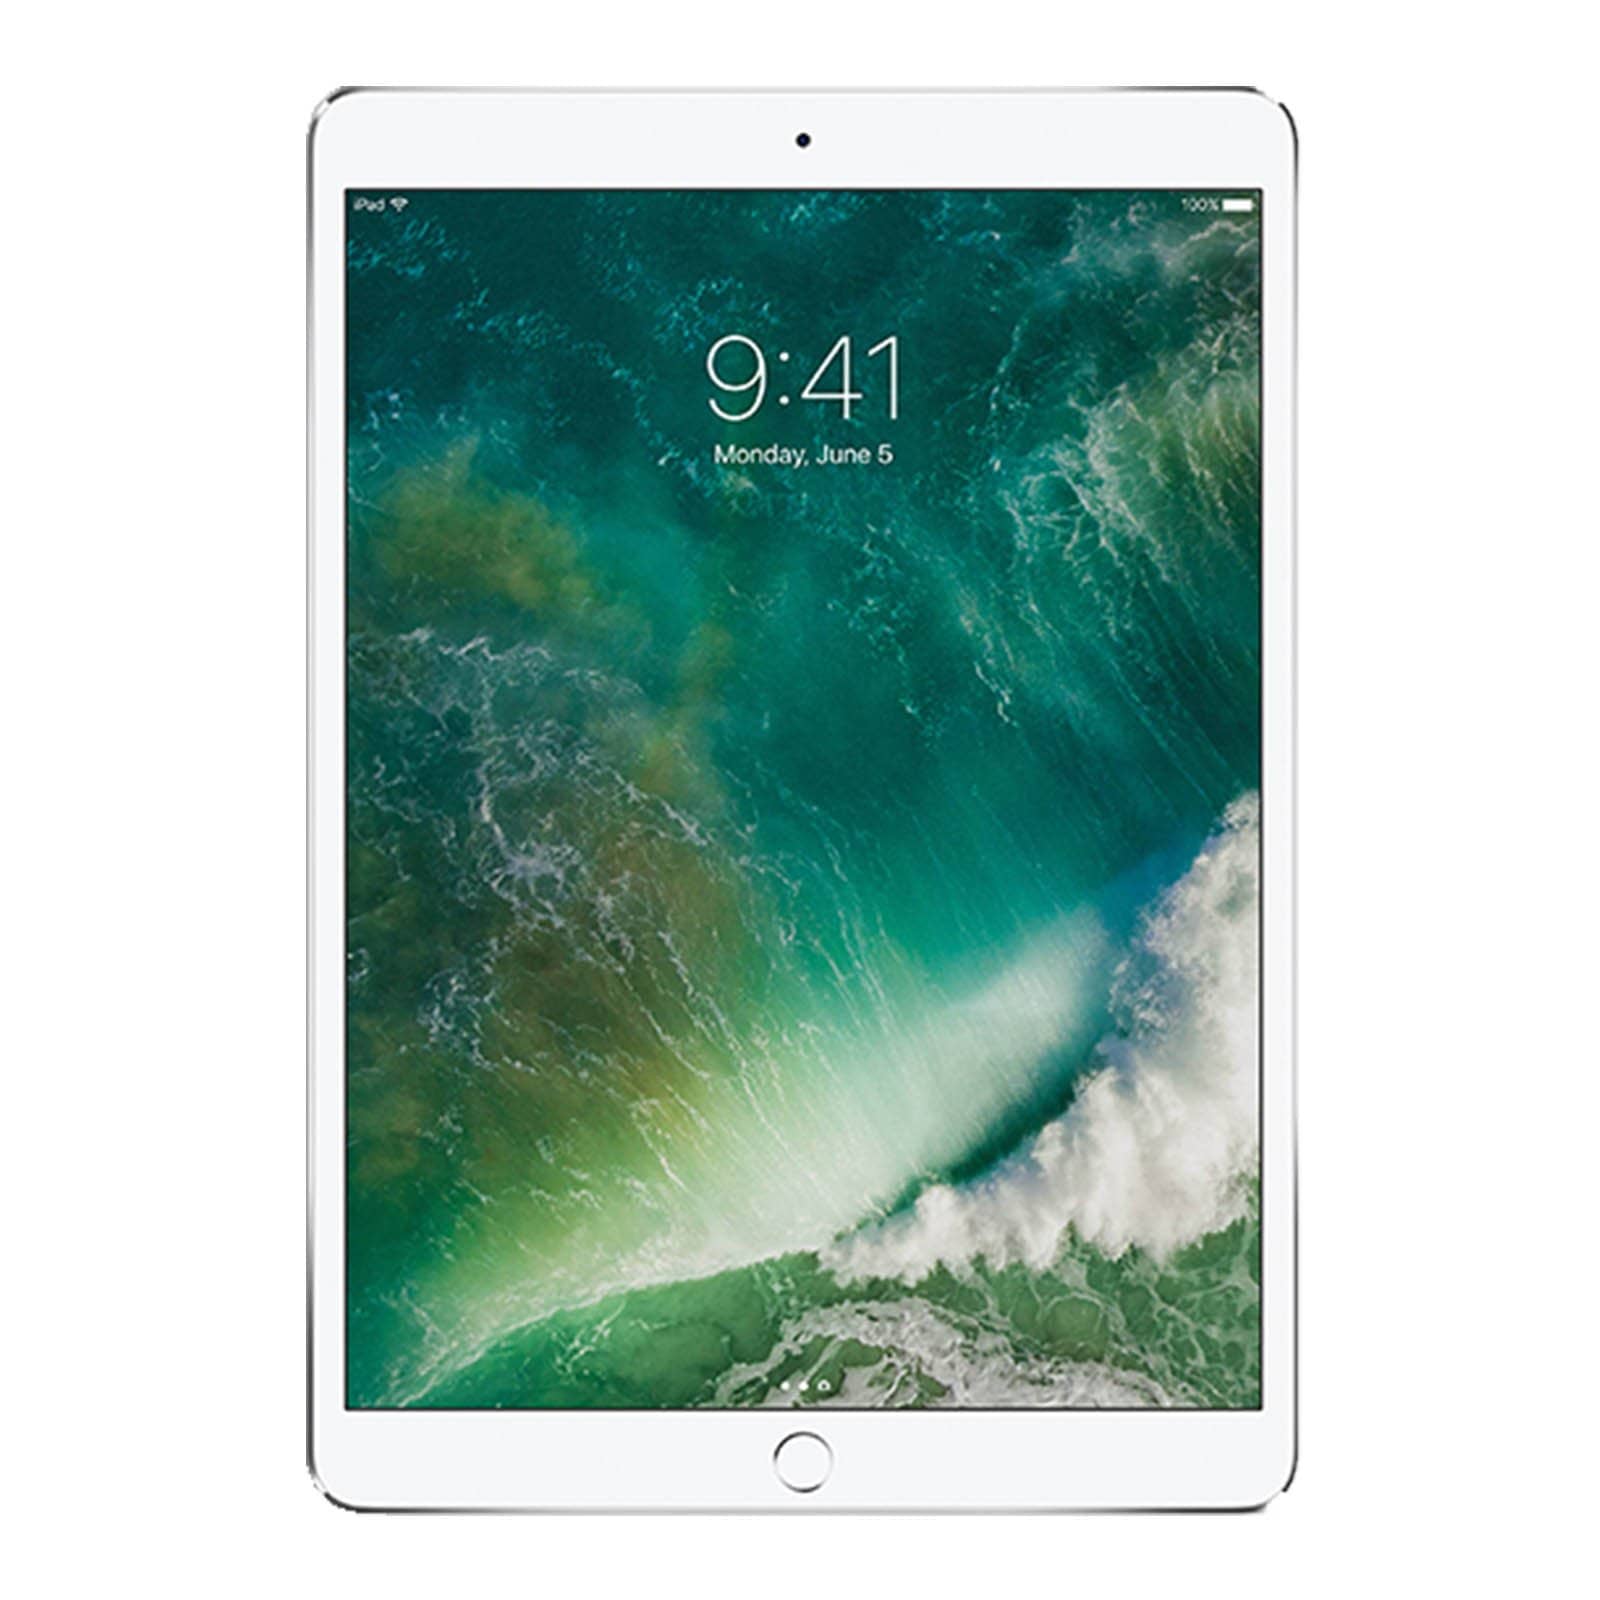 iPad Pro 10.5 Inch 256GB Silver Very Good - Unlocked